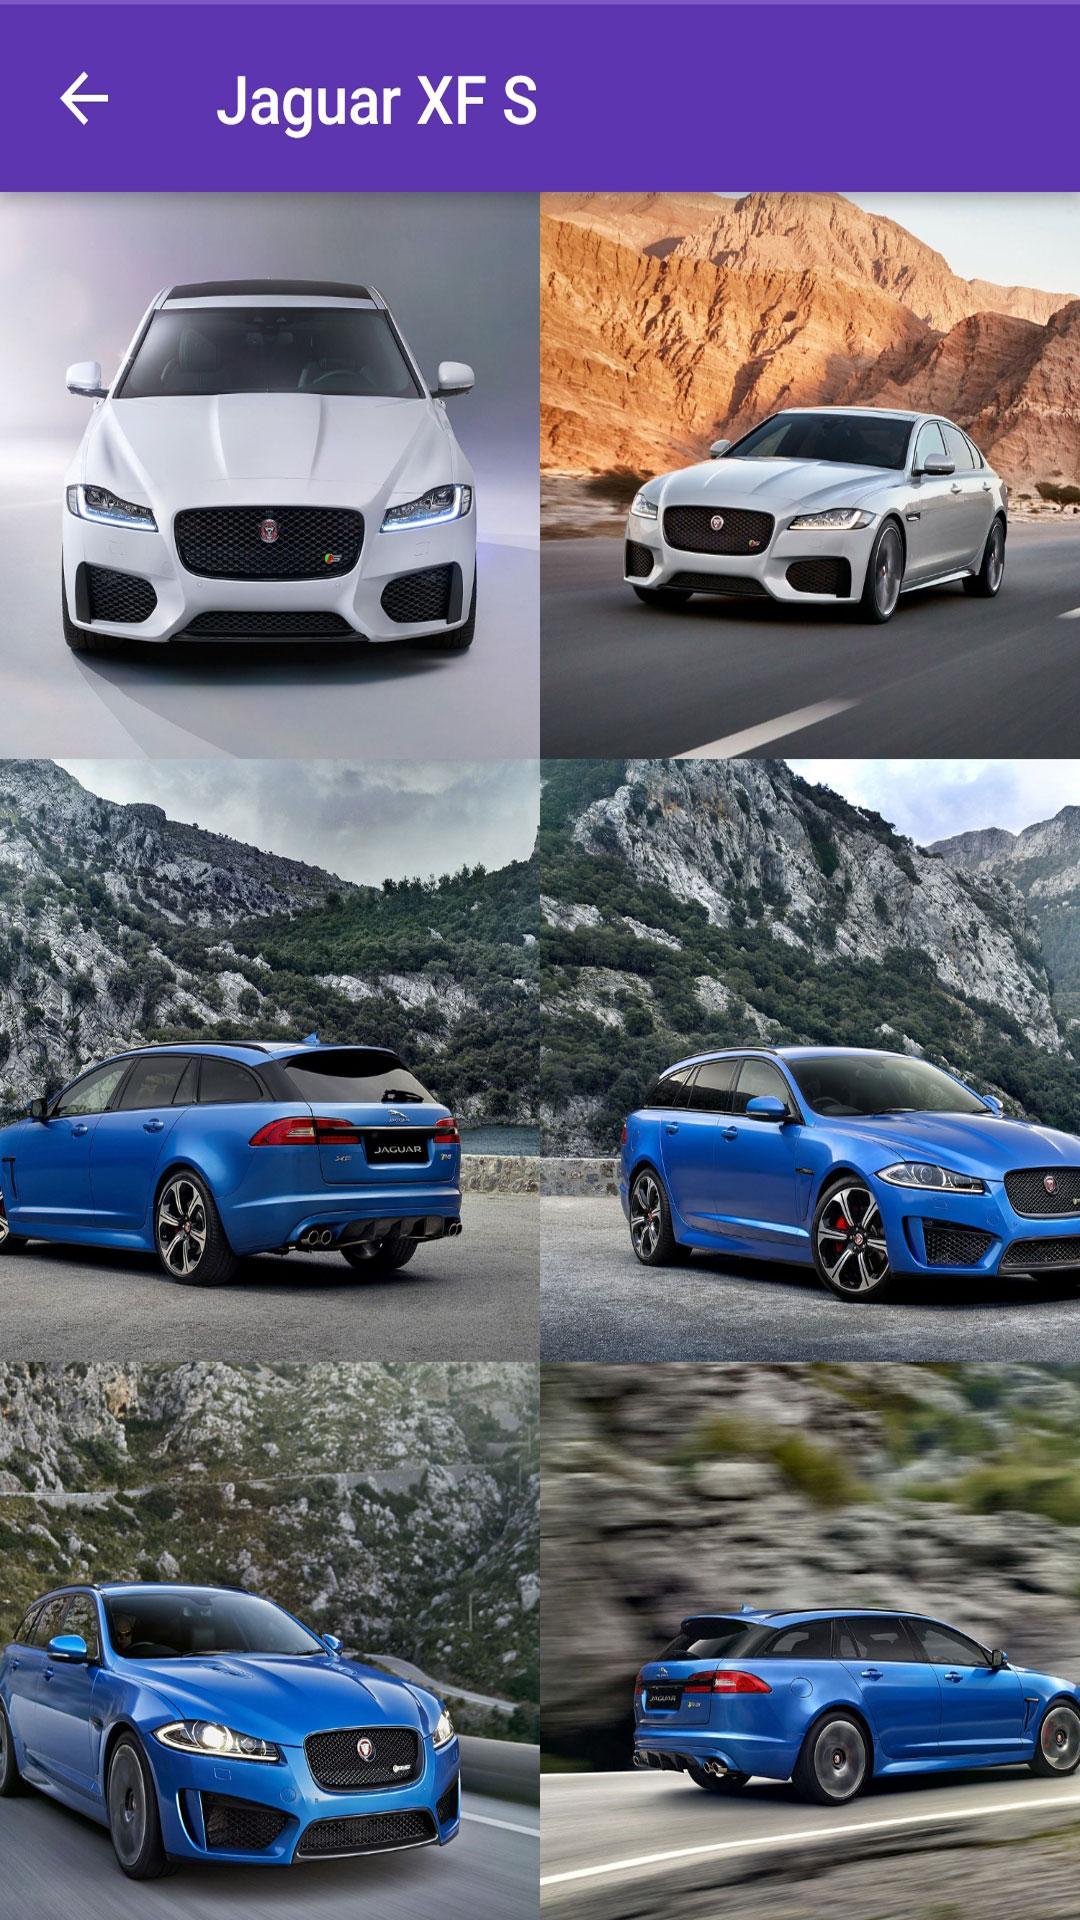 Jaguar Car Wallpapers For Android Apk Download